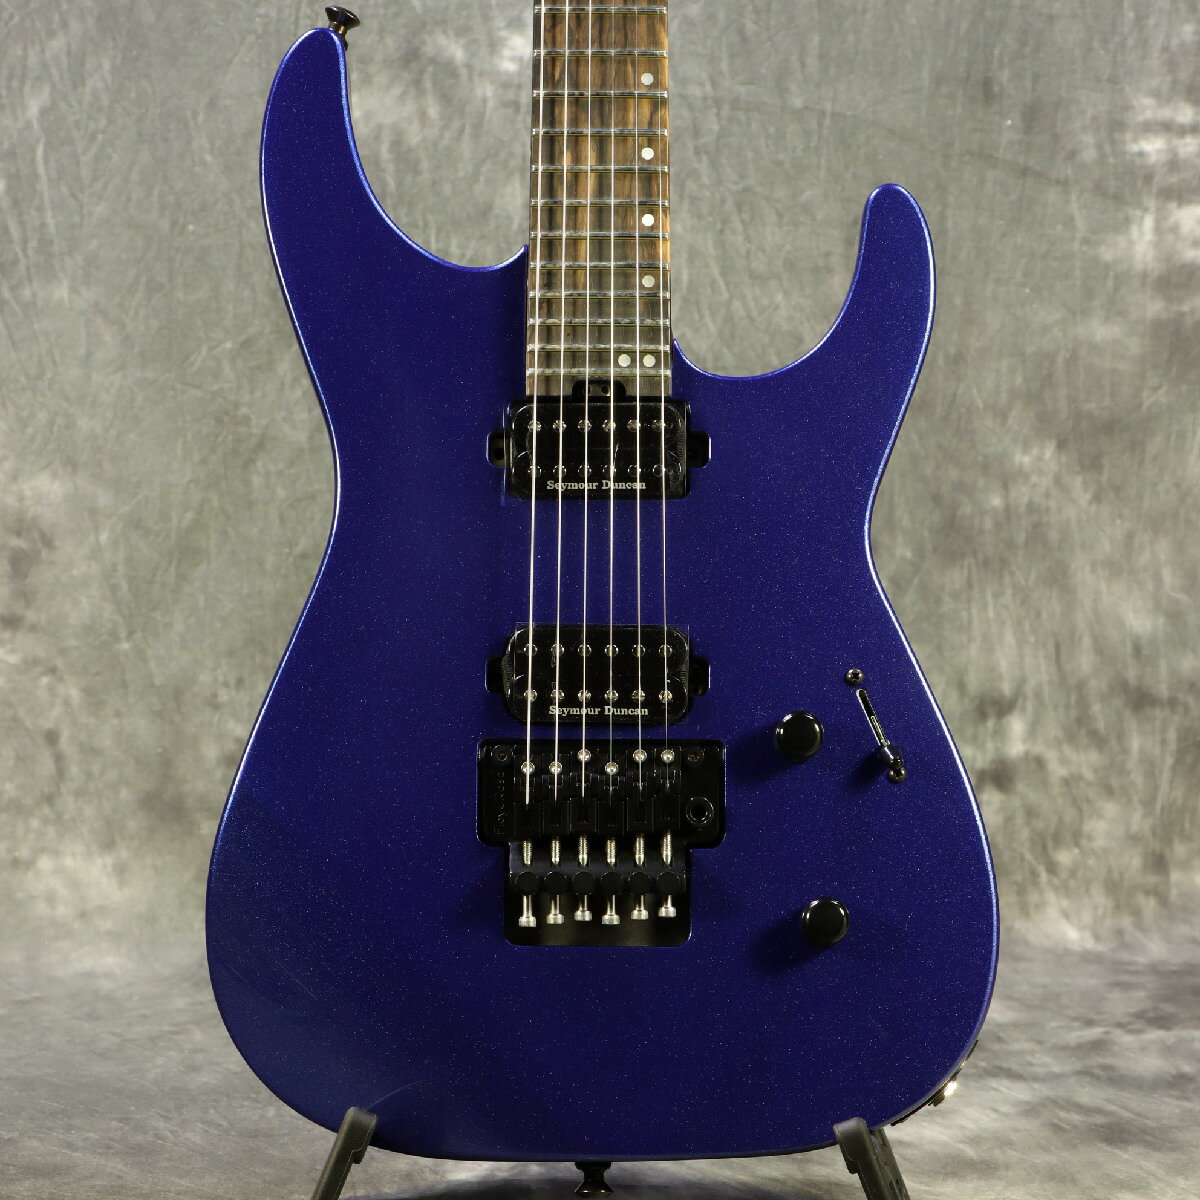 sWEBSHOPNAXZ[tJackson / American Series Virtuoso Streaked Ebony Fingerboard Mystic Blue [USA][3.65kg]y摜z[S/N JAS2301232]s+4582600680067tyPNGz